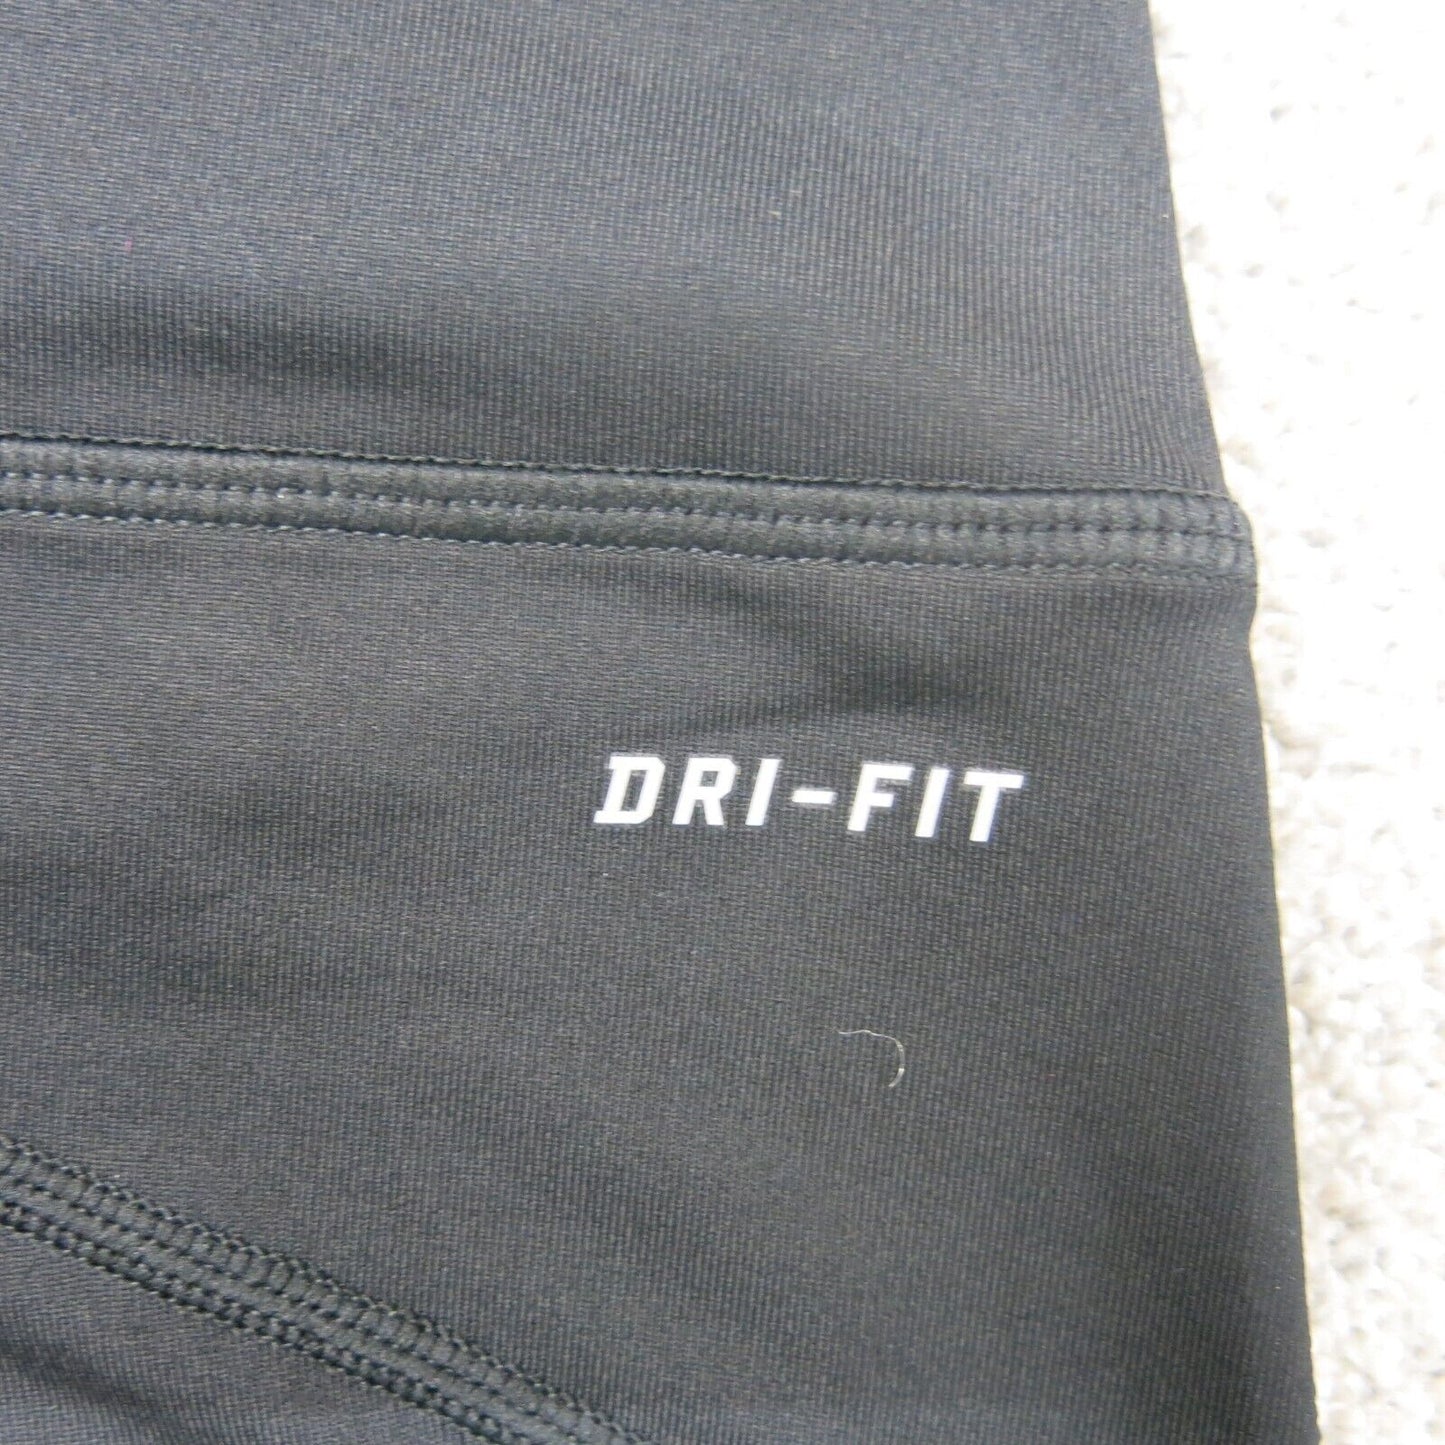 Nike DRI FIT Womens Activewear Leggings Pant Drawstring Waist Black Size Medium